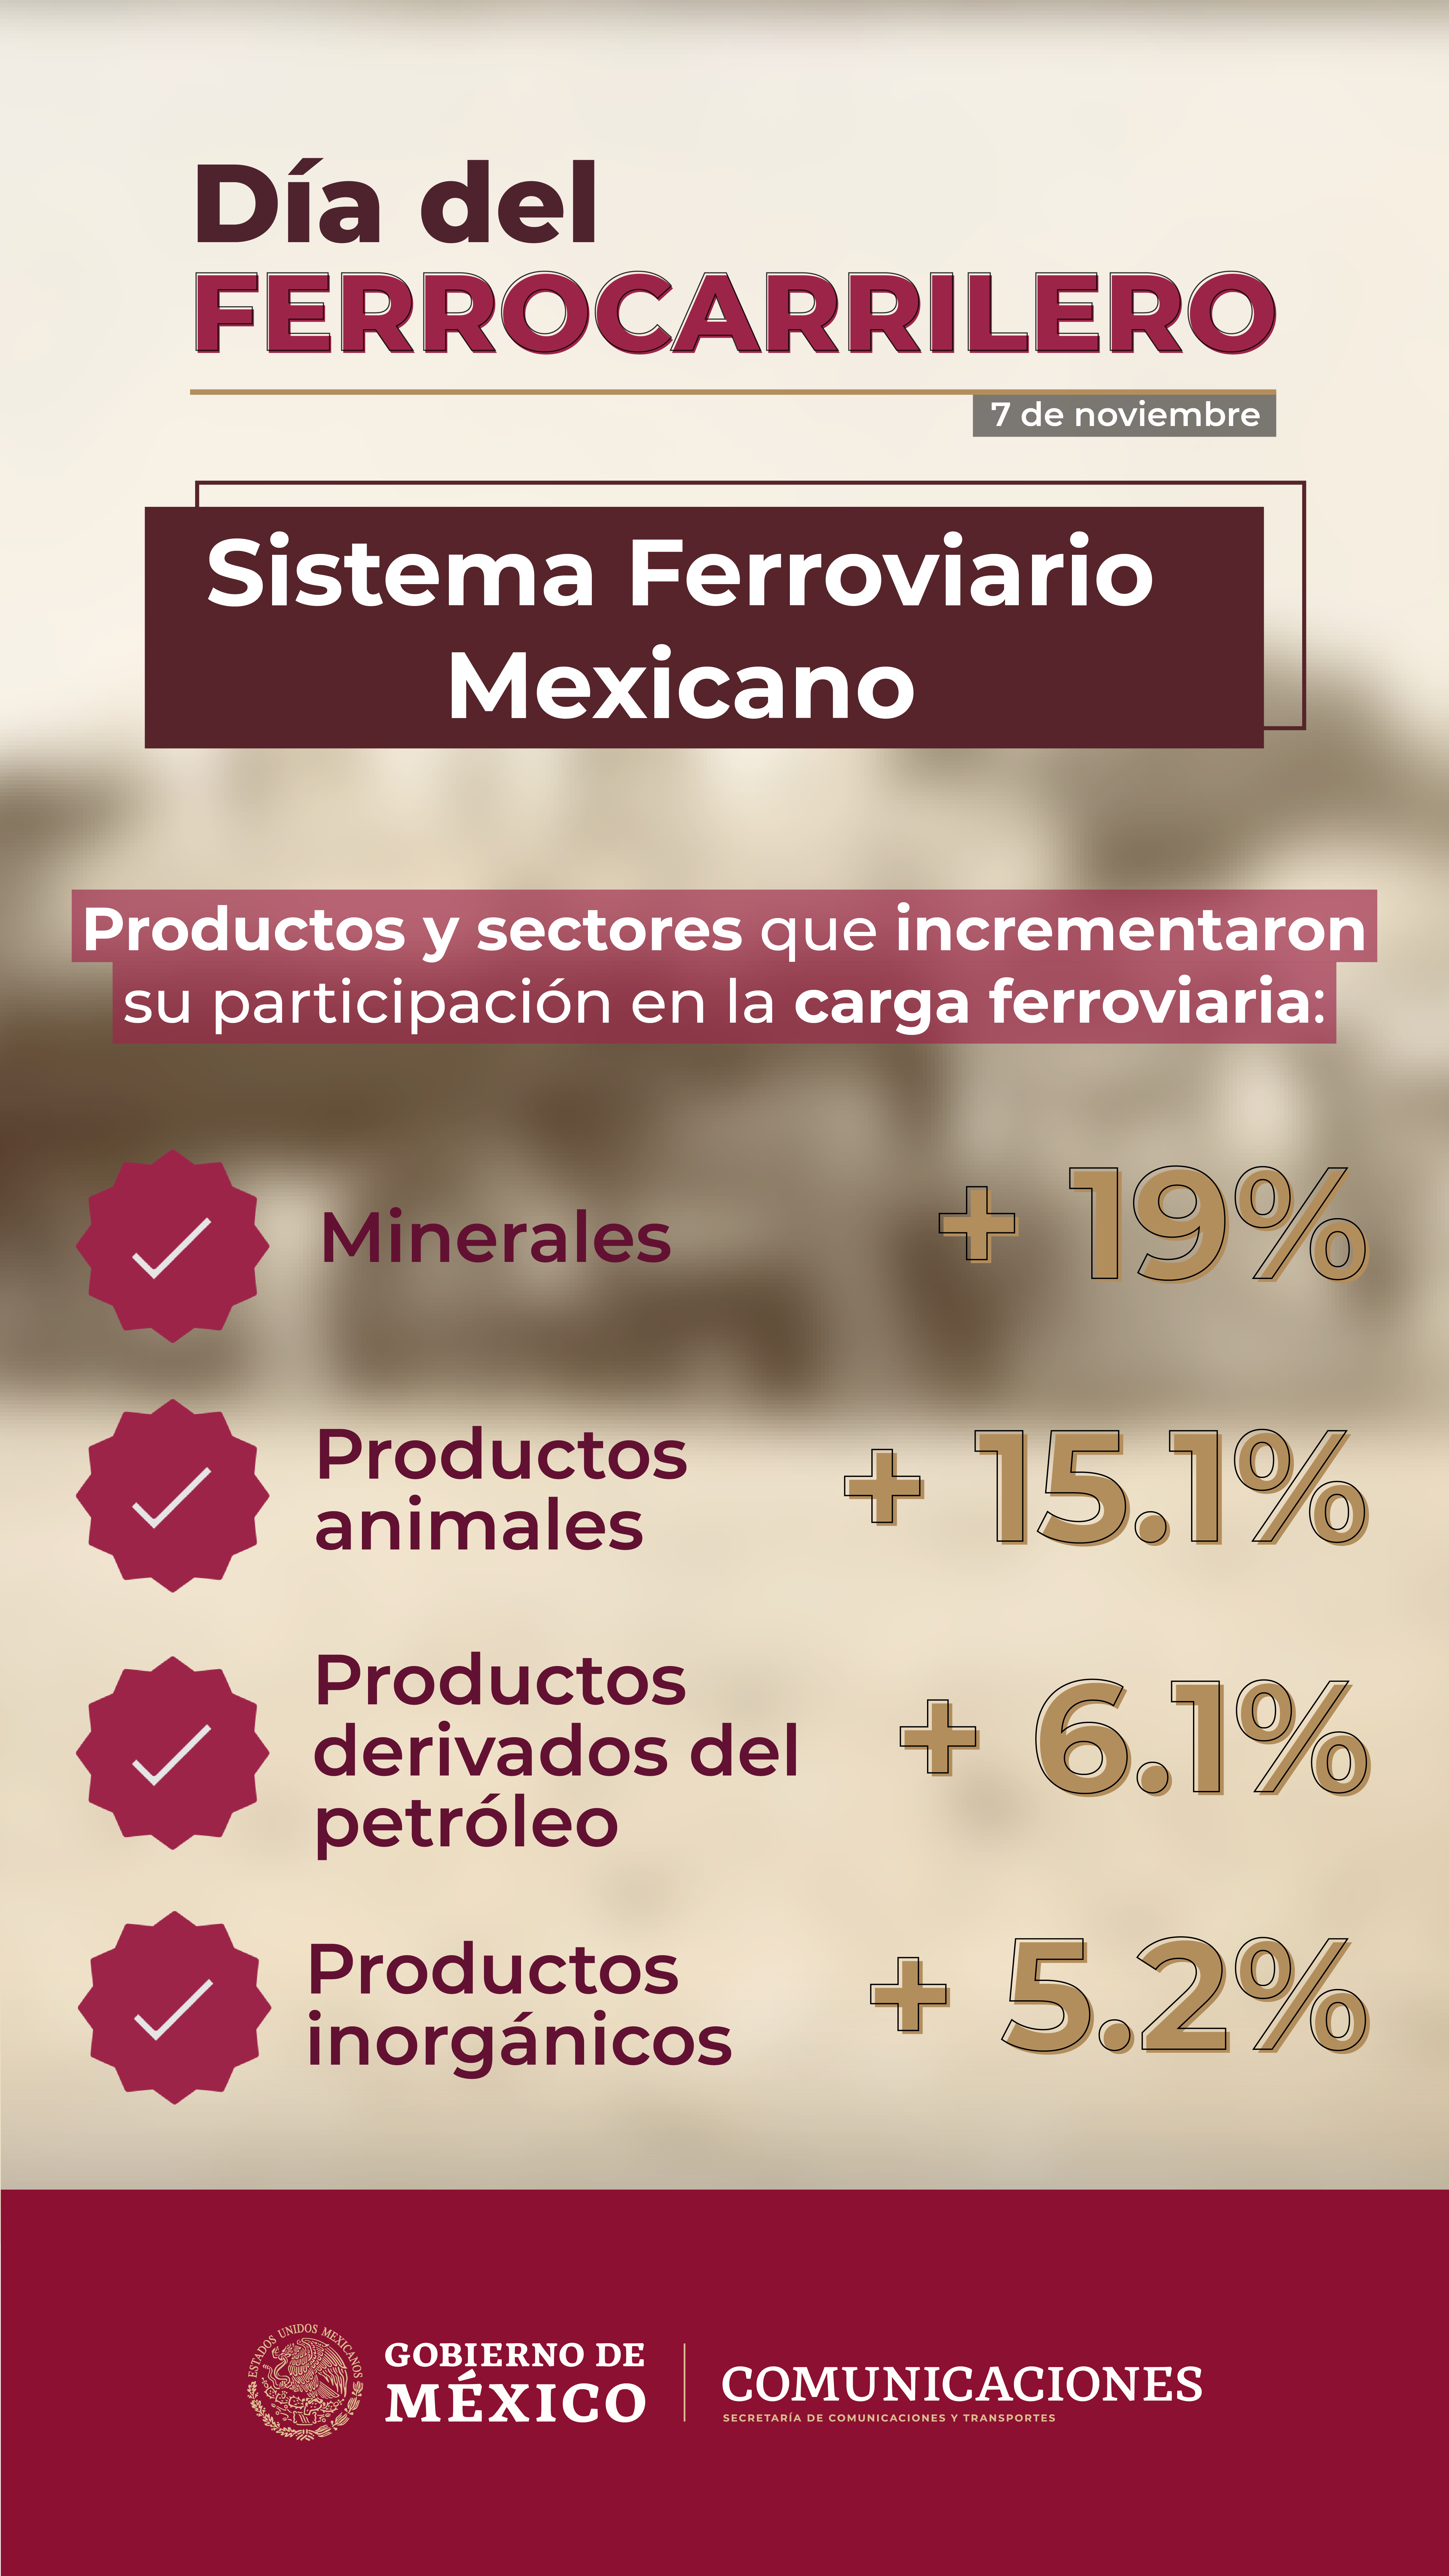 /cms/uploads/image/file/541626/D_a_del_Ferrocarrilero_-_Sistema_Ferroviario_Mexicano_-_Productos_y_Sectores.png